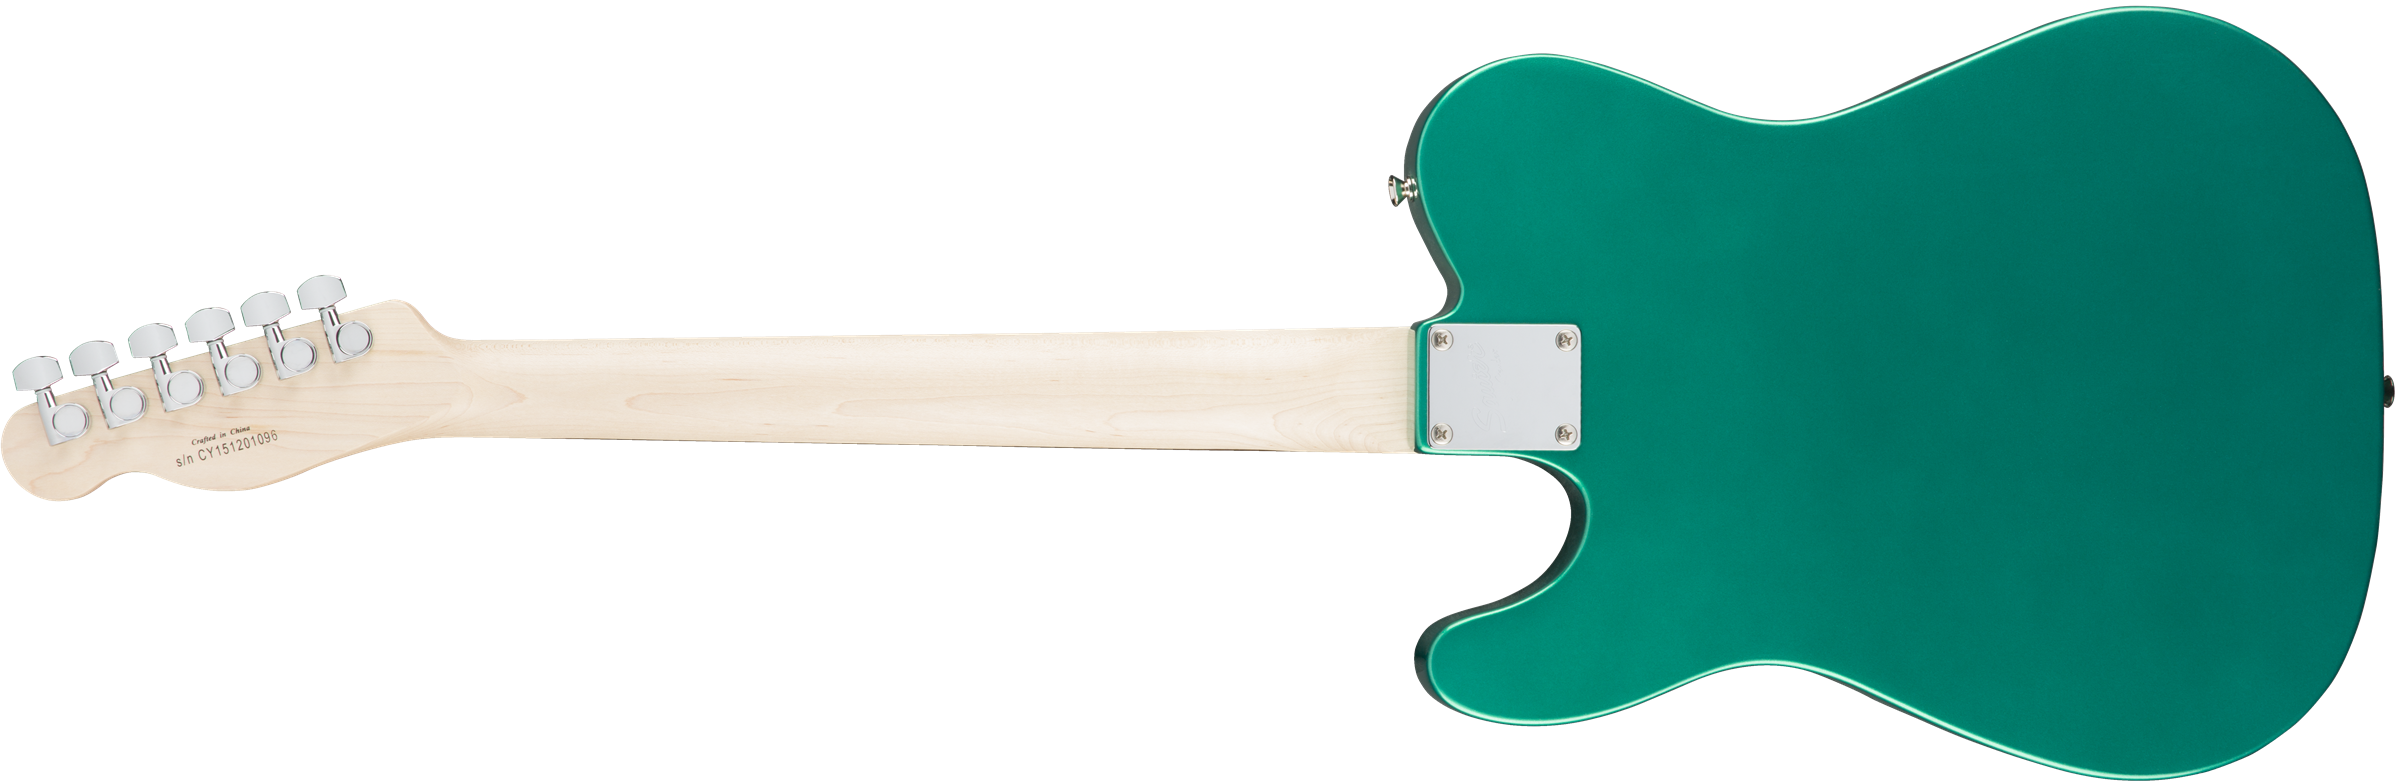 Squier Tele Affinity Series 2019 Lau - Race Green - Guitarra eléctrica con forma de tel - Variation 5